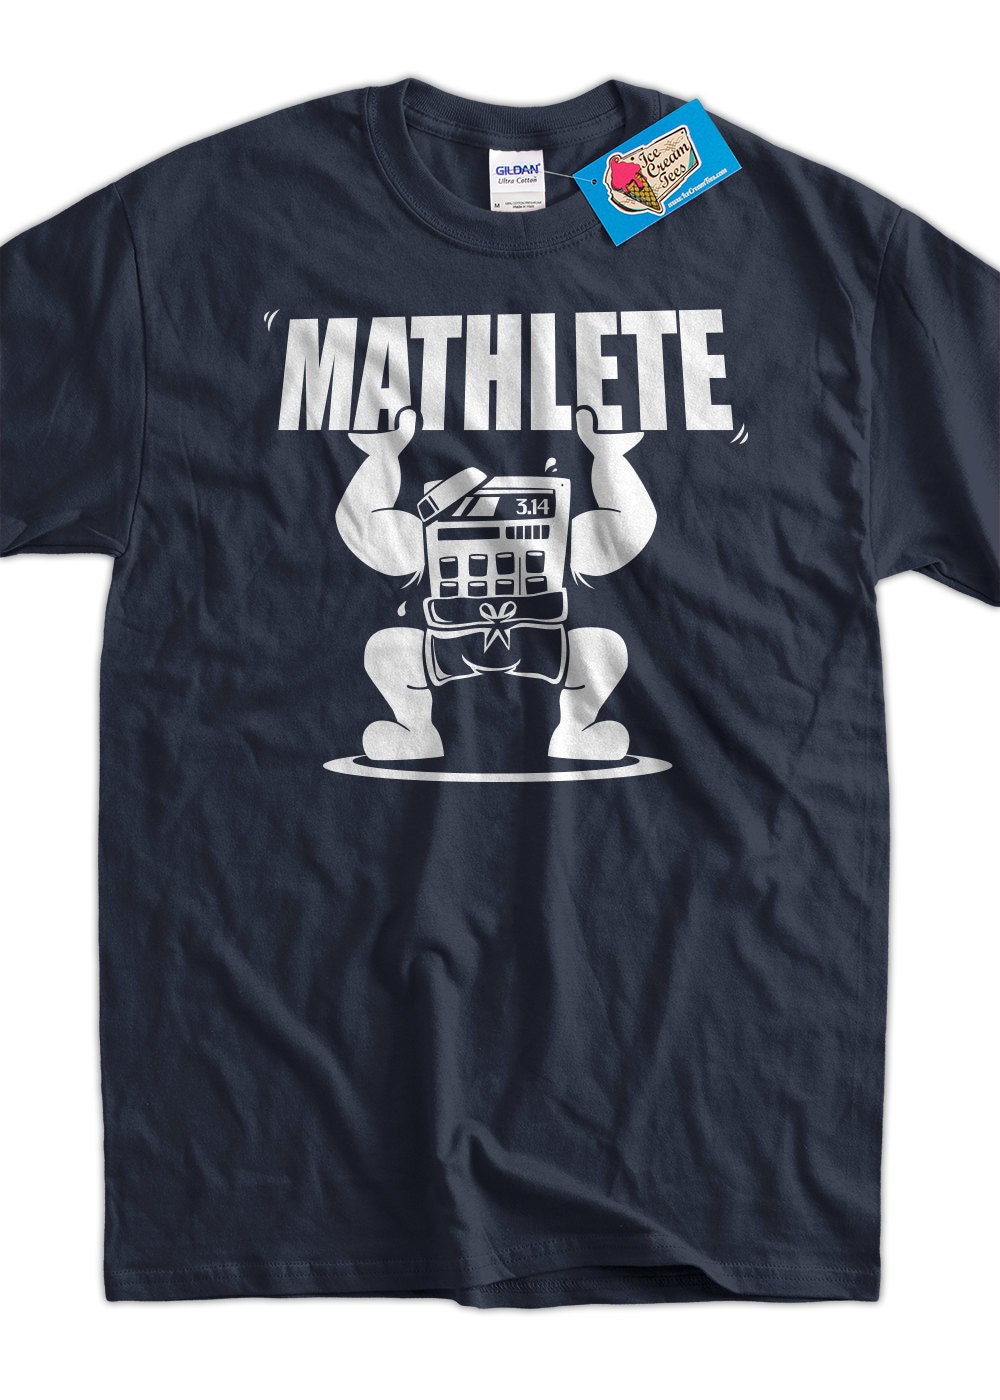 mathlete t shirts